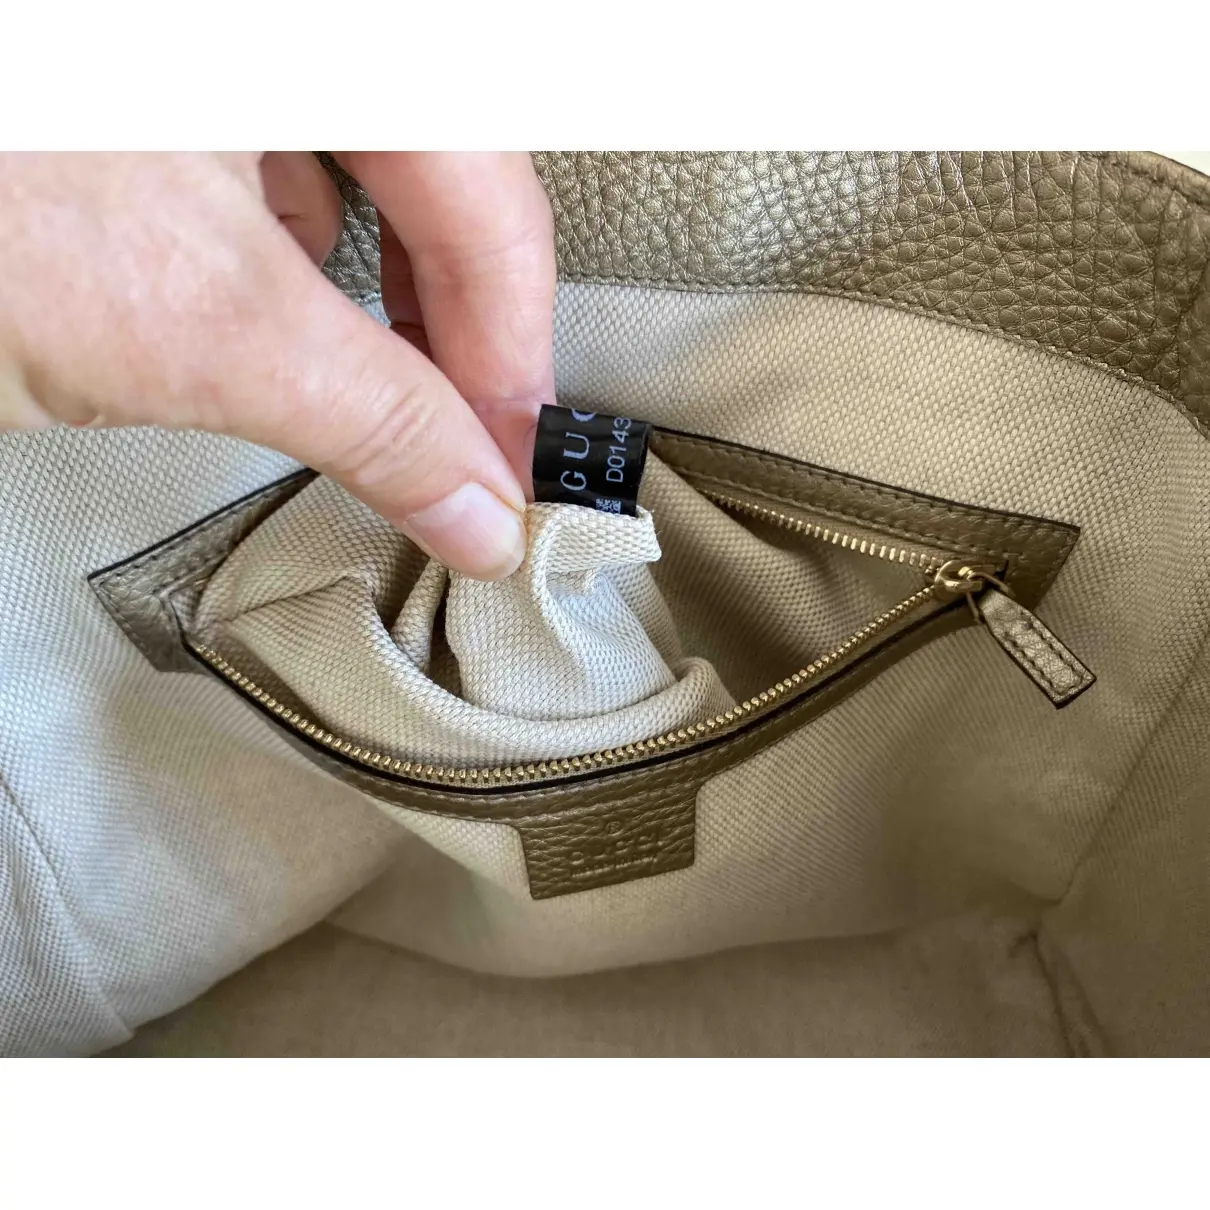 Buy Gucci Soho leather handbag online